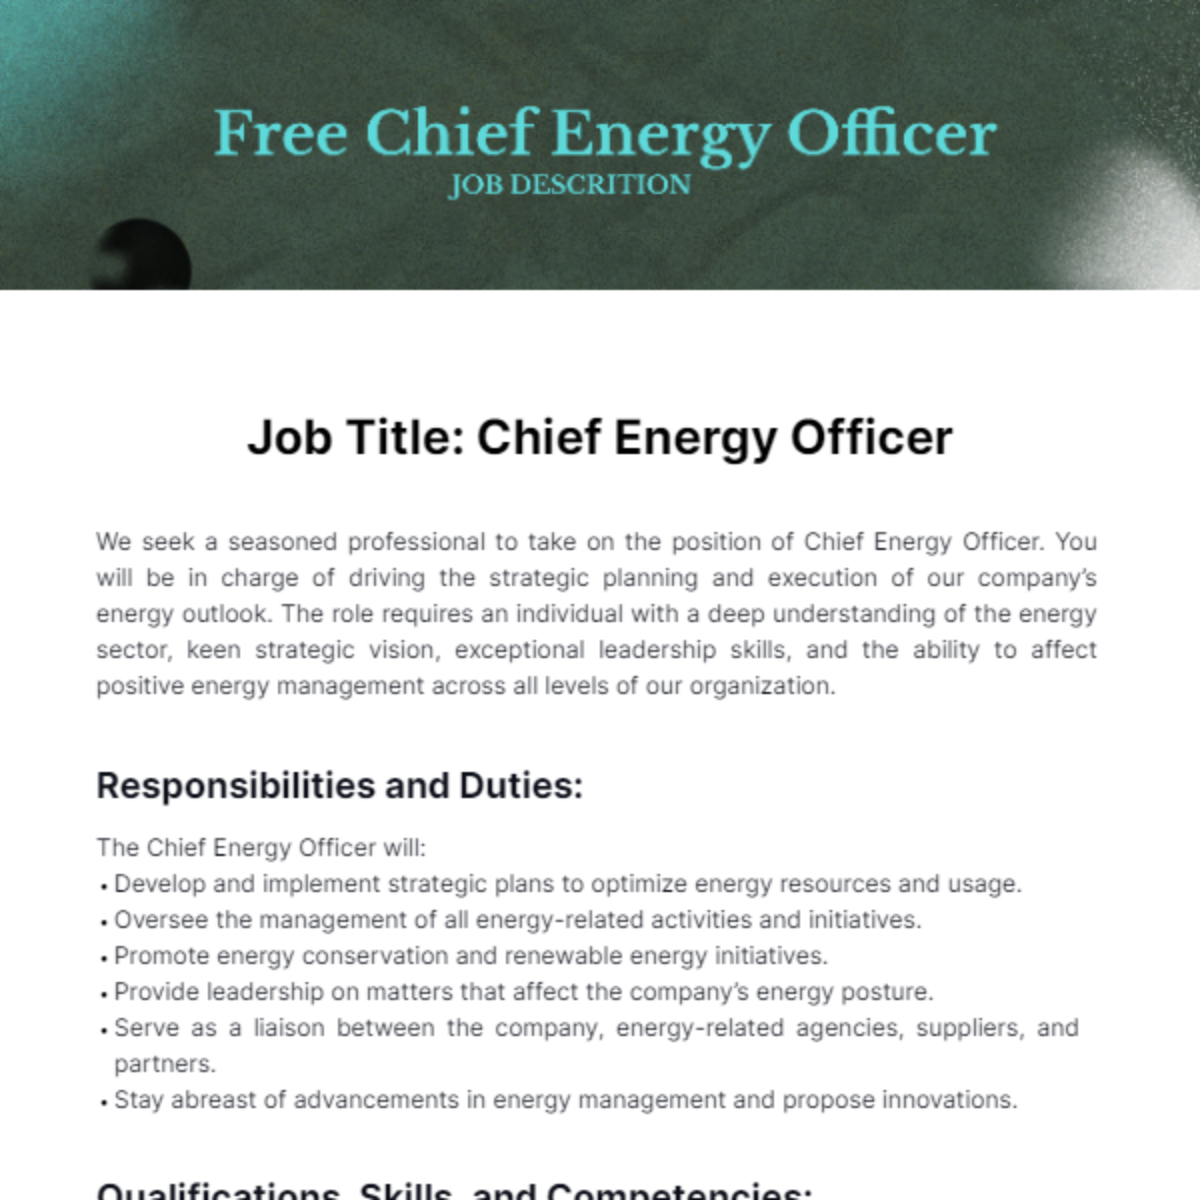 Free Chief Energy Officer Job Description Template